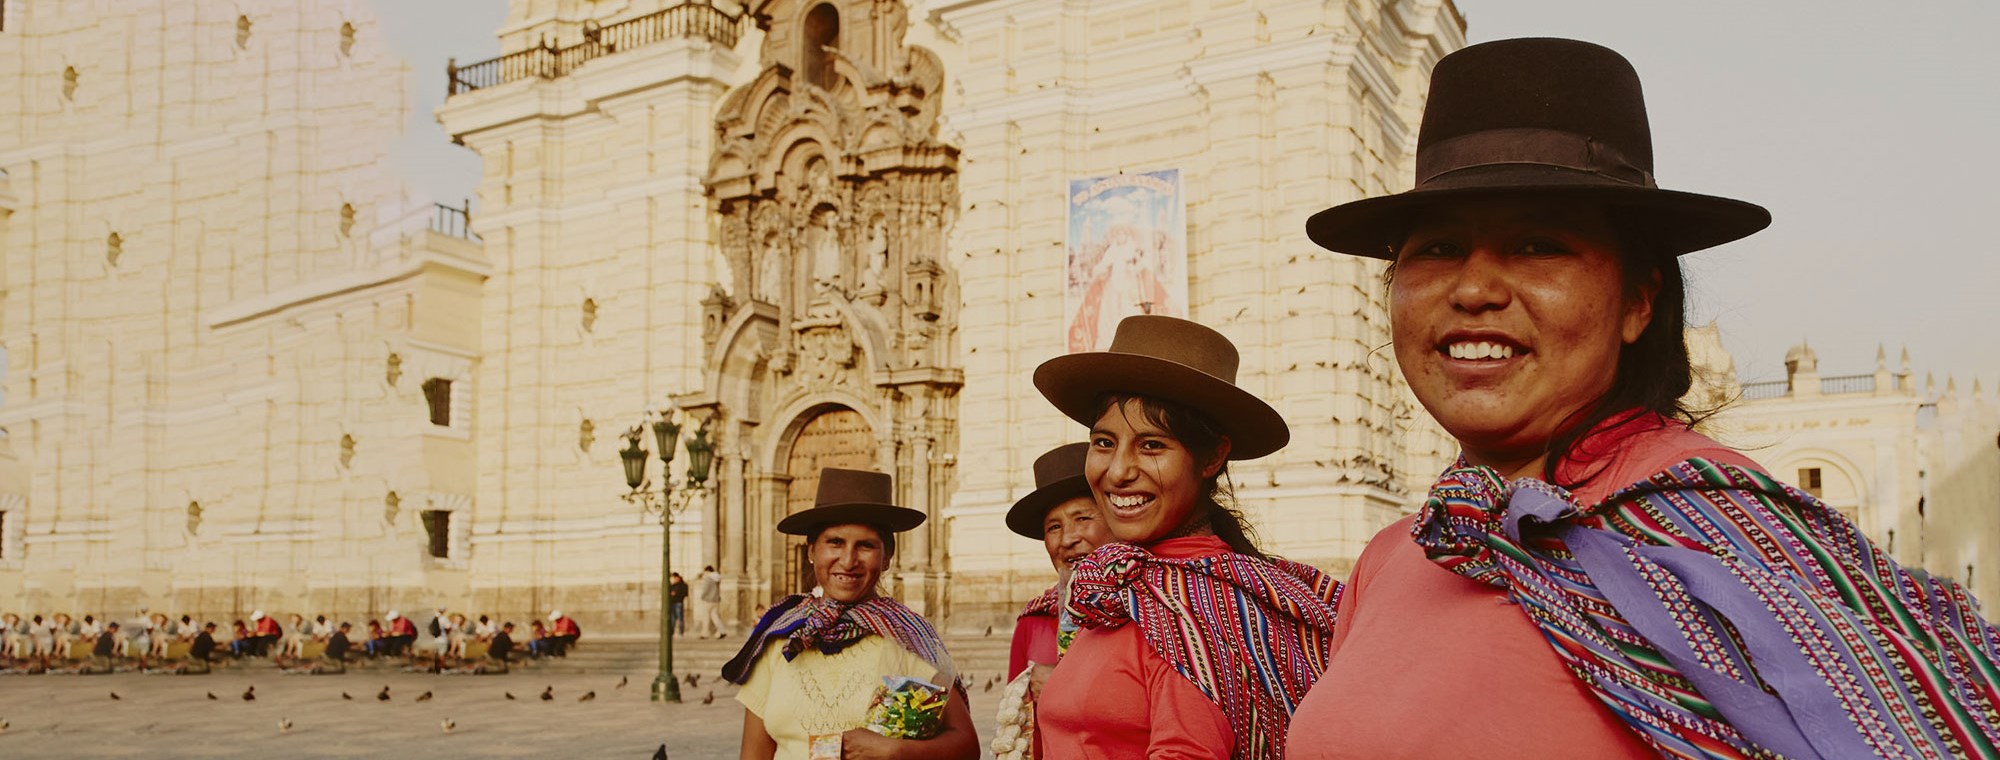 Peru tours of the Church of San Francisco, Lima